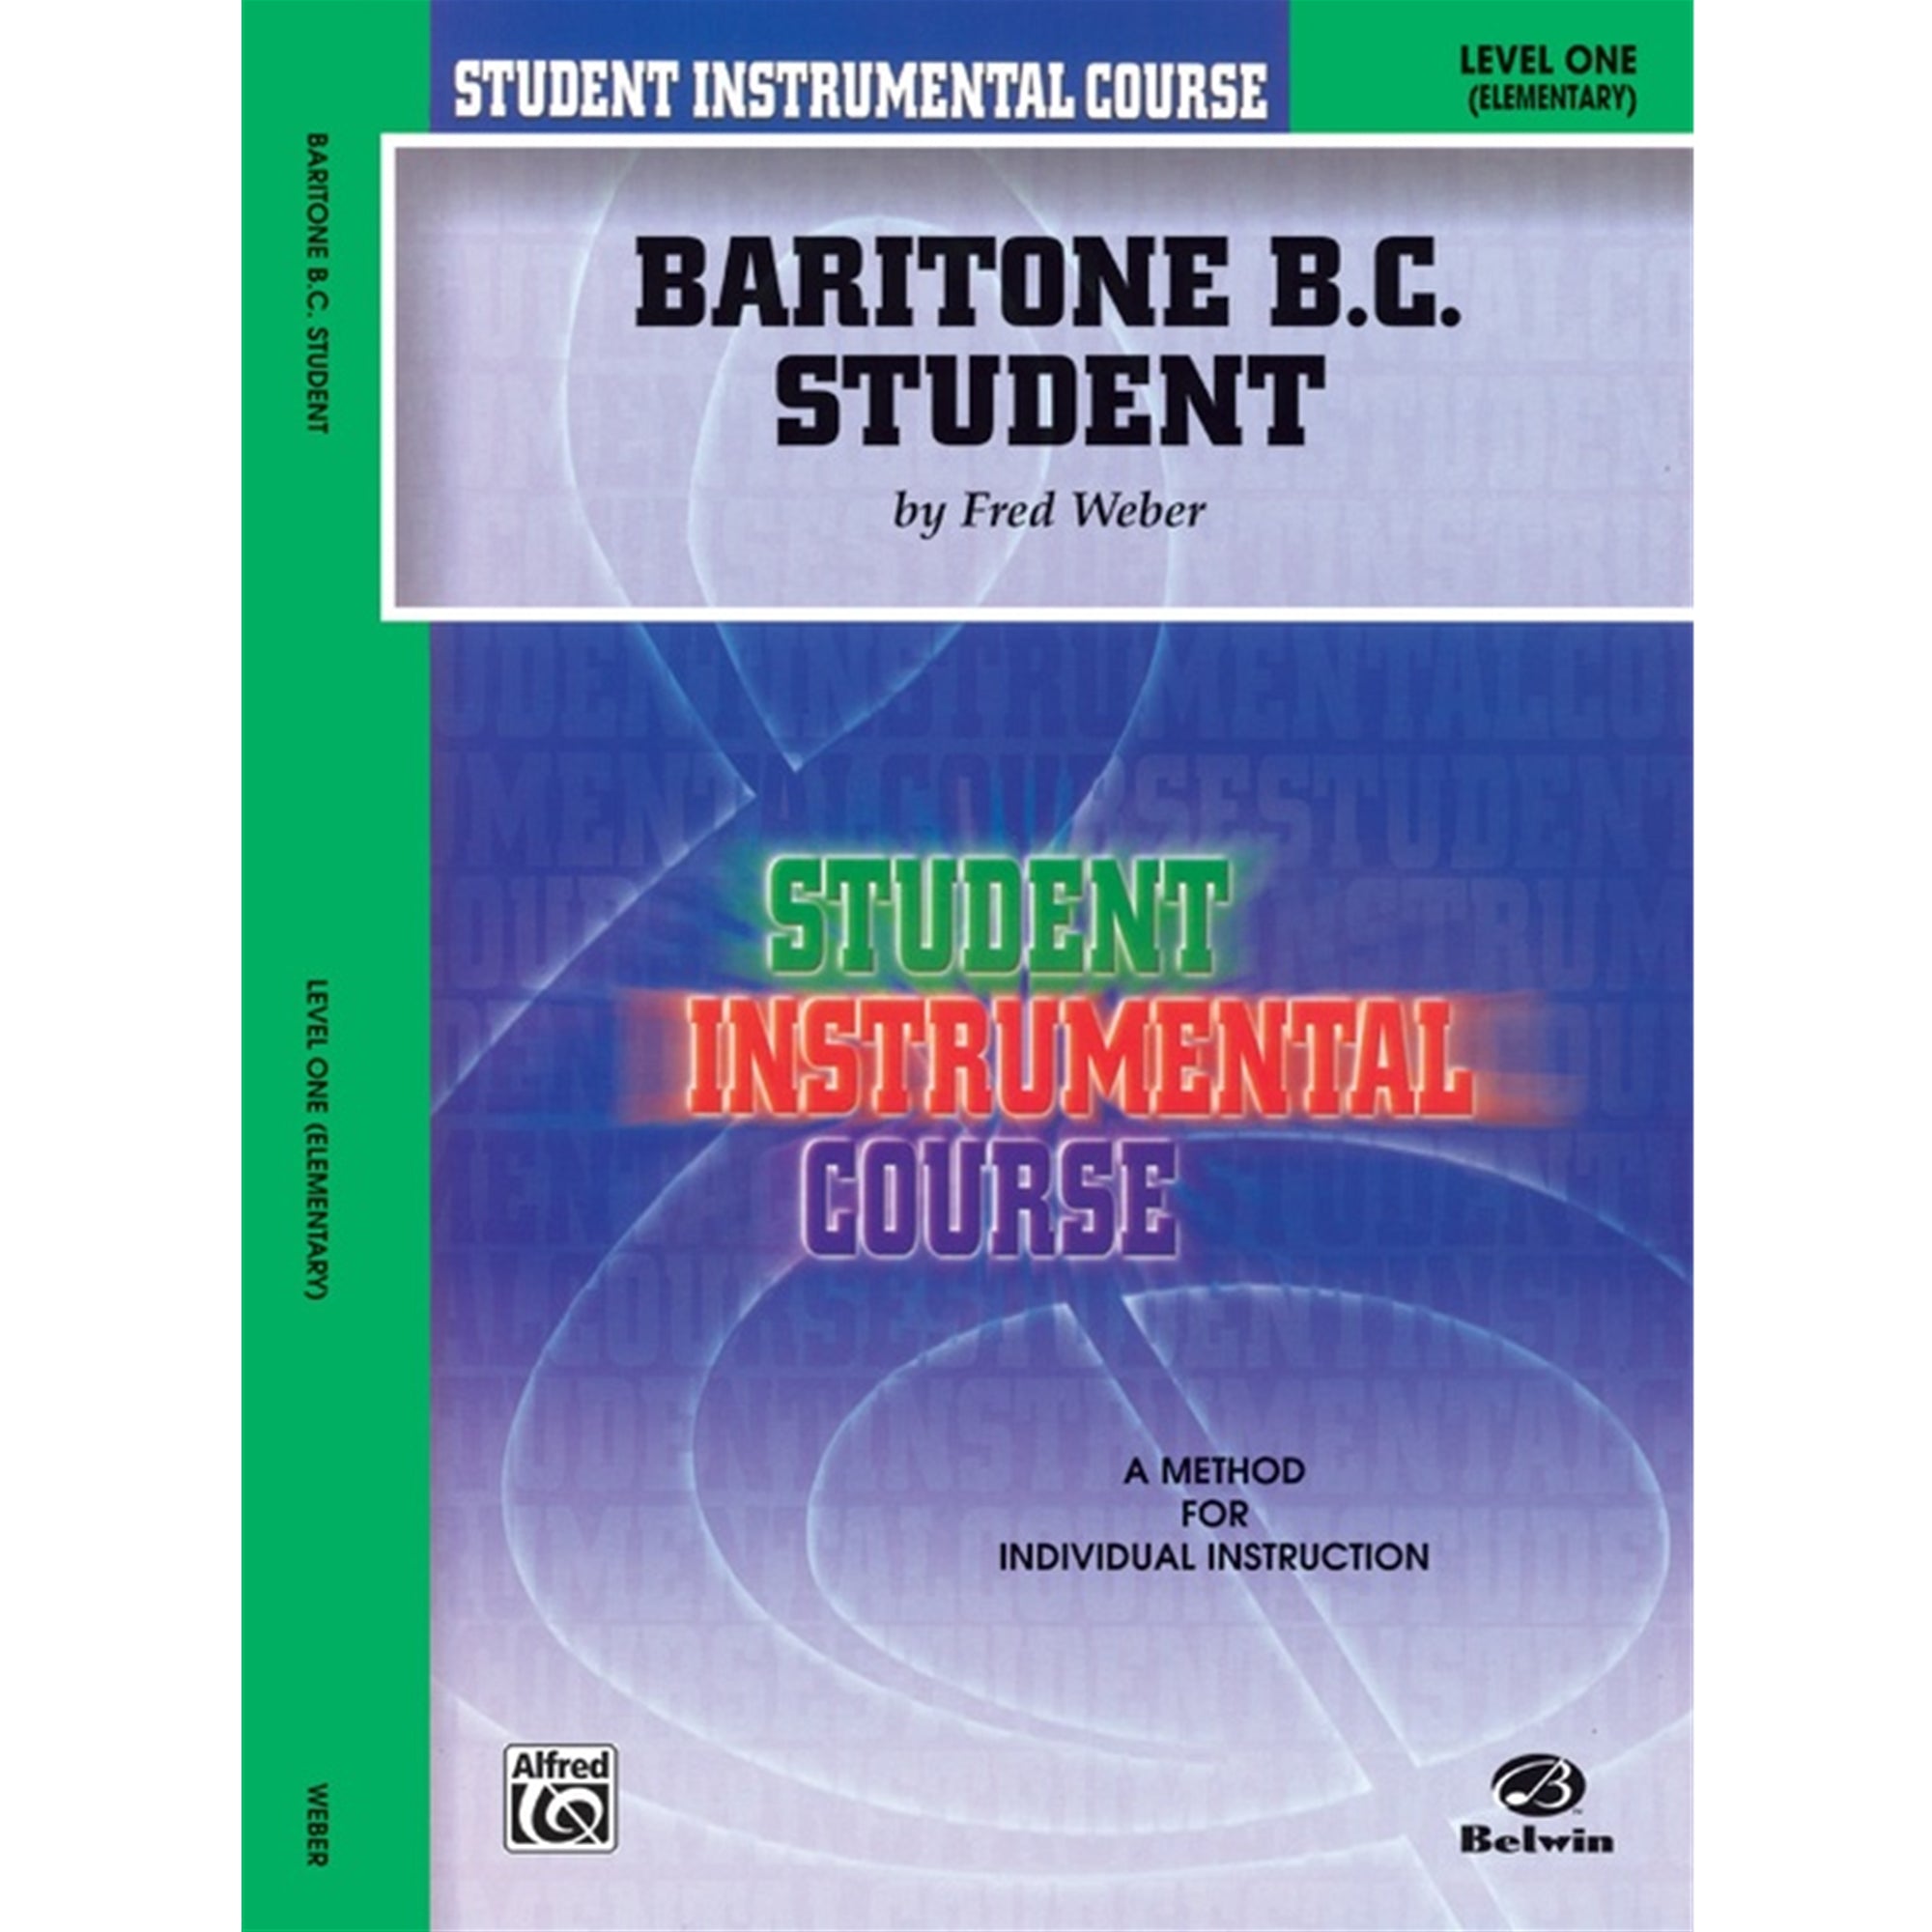 ALFRED BIC00161A Student Instrumental Course: Baritone B.C. Student, Level I [Baritone B.C.]